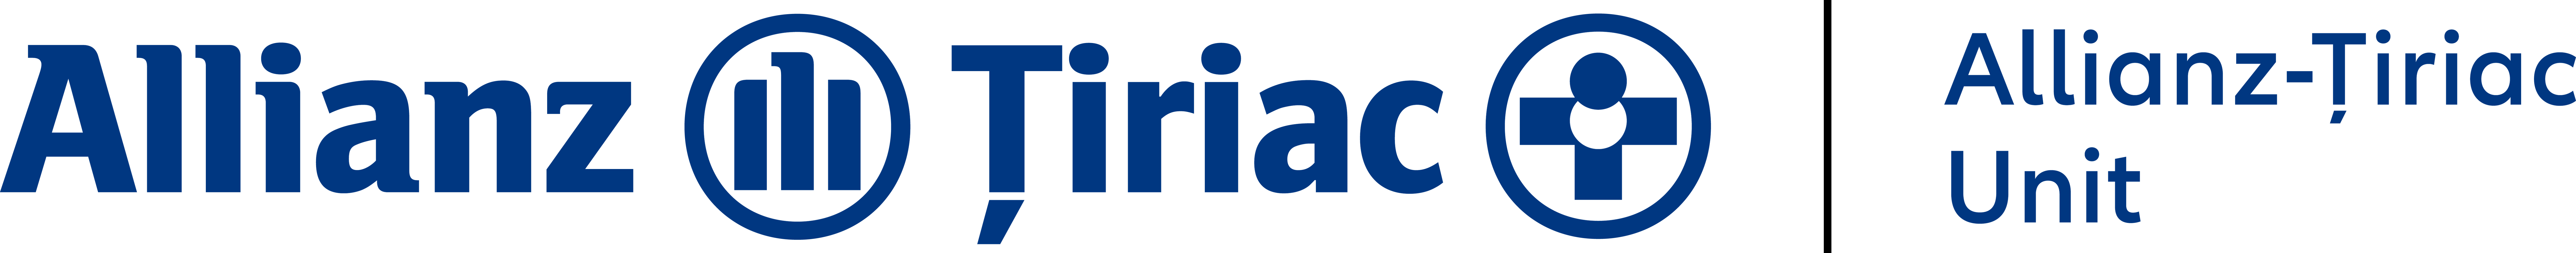 Firma de Asigurari Allianz-Tiriac Unit - Logo, allianztiriacunit.ro